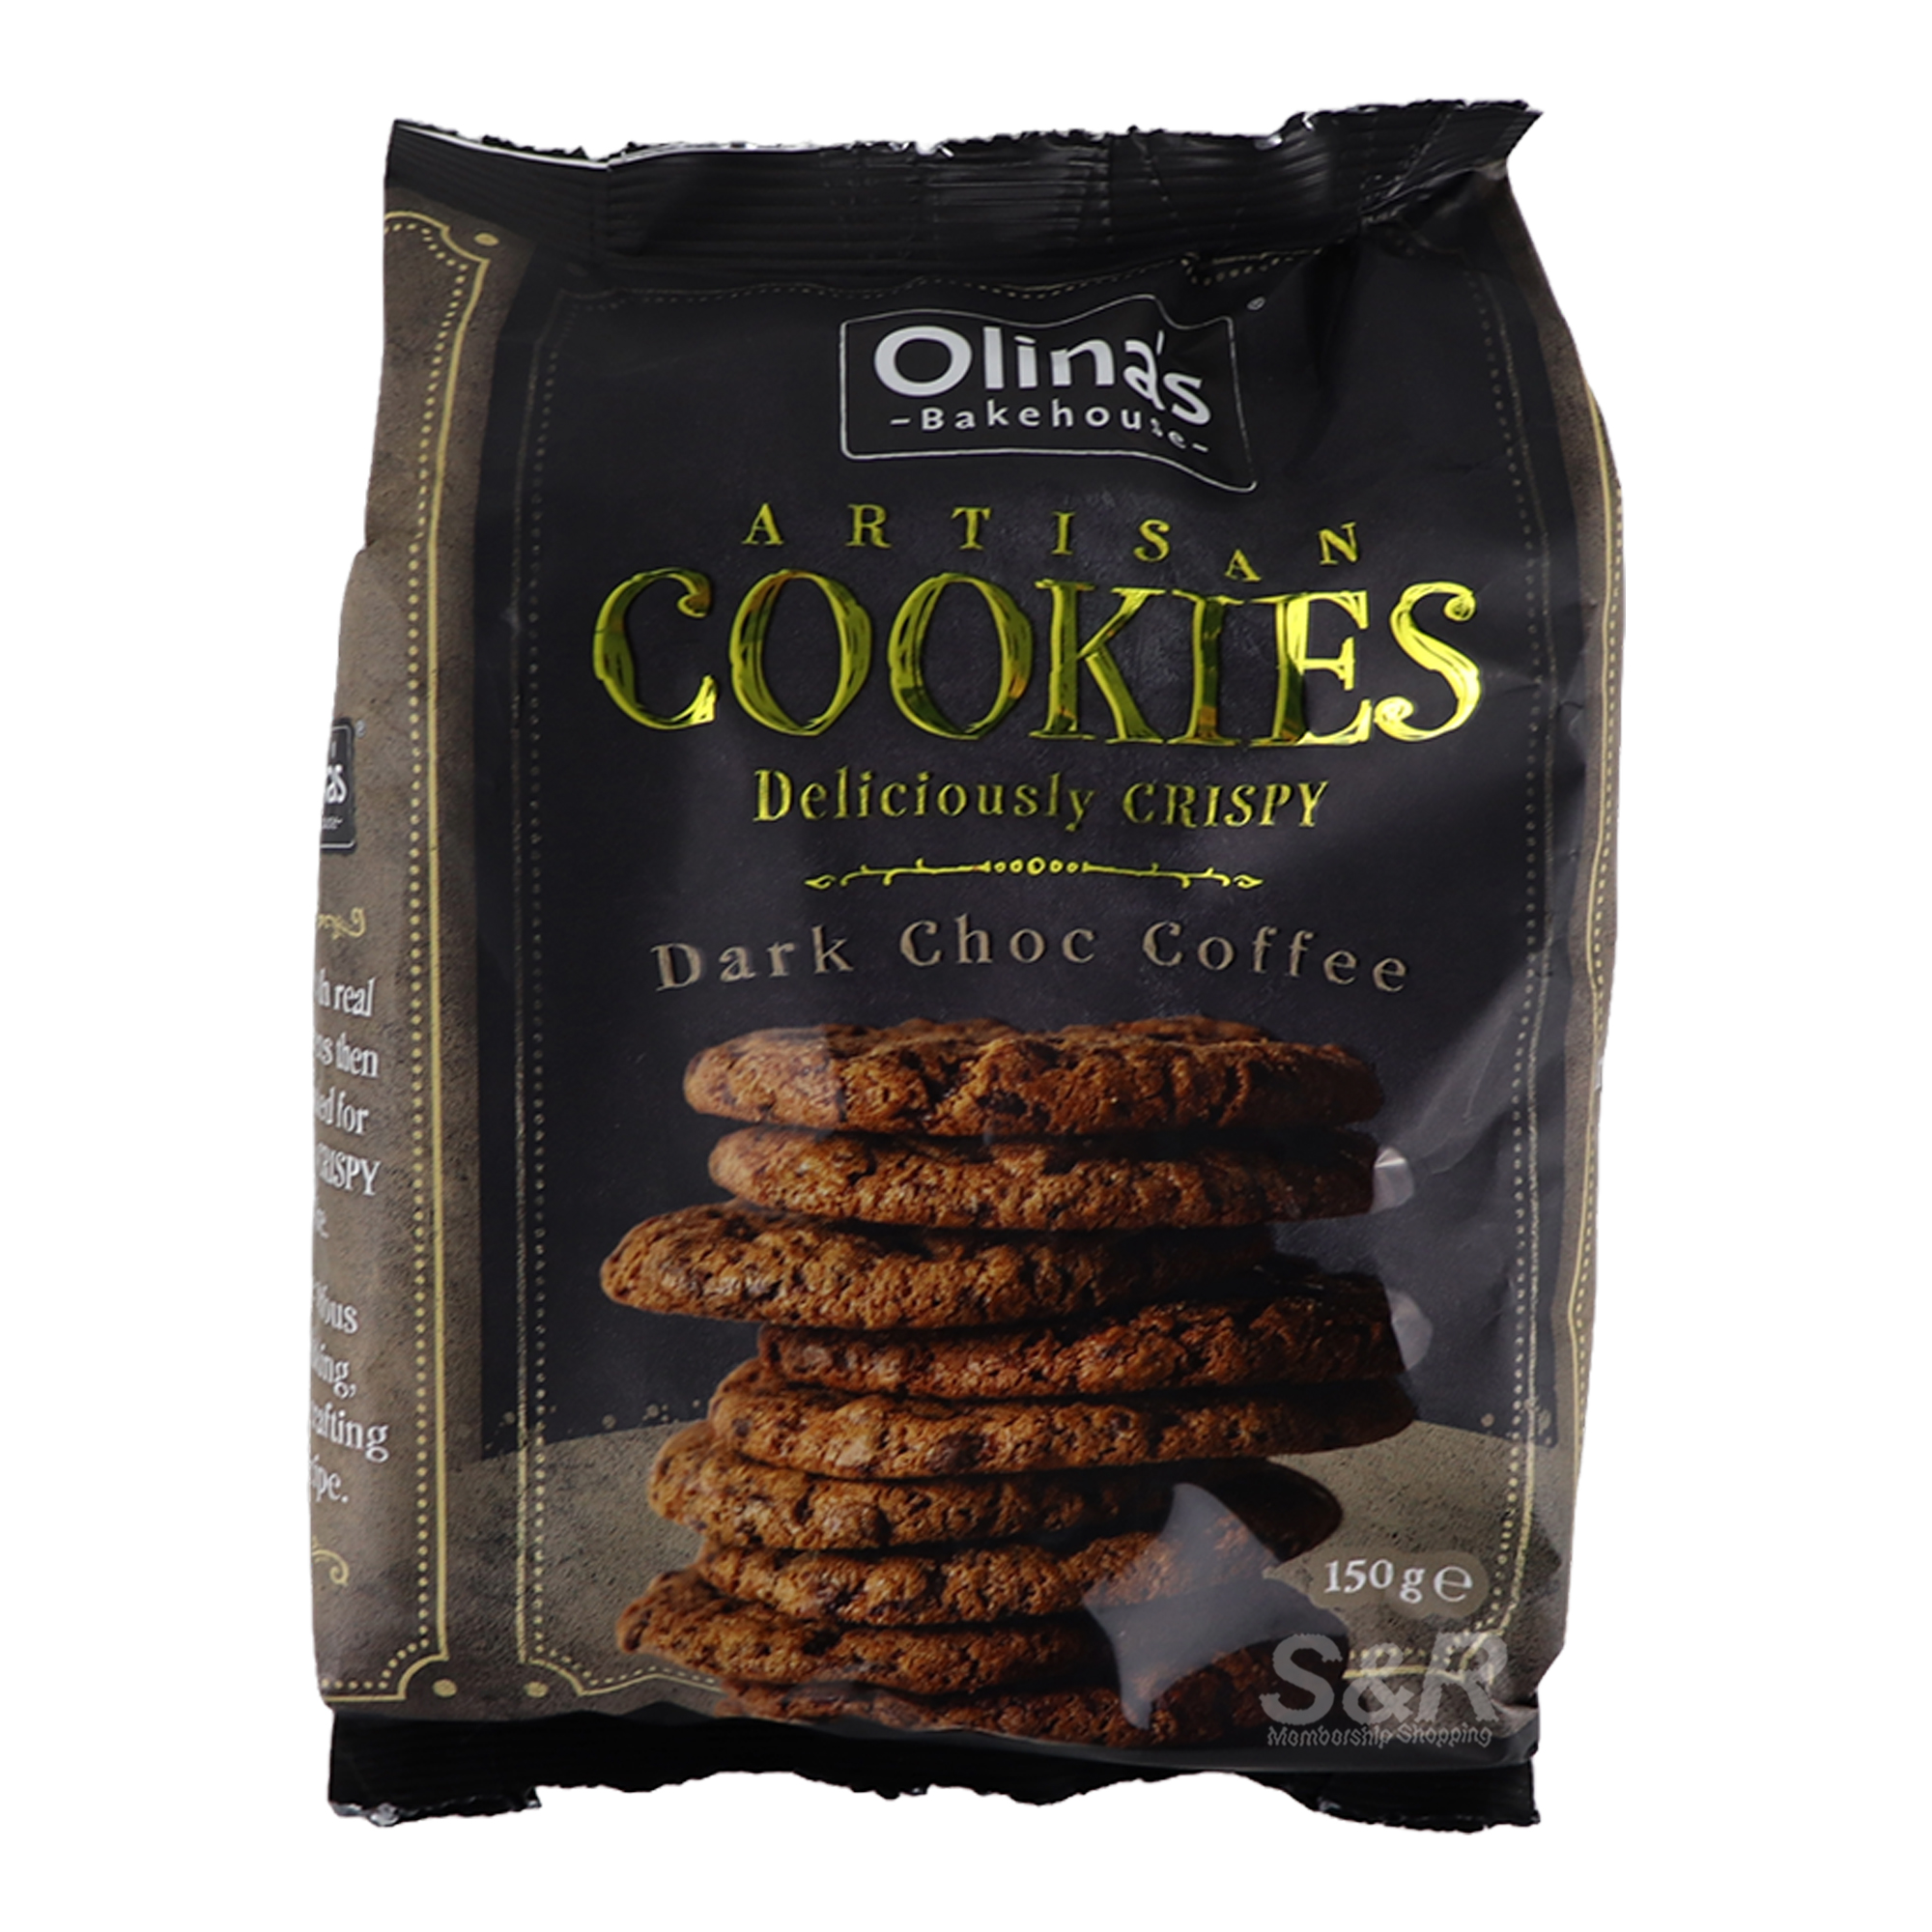 Olina's Artisan Cookies Dark Chocolate Coffee 150g